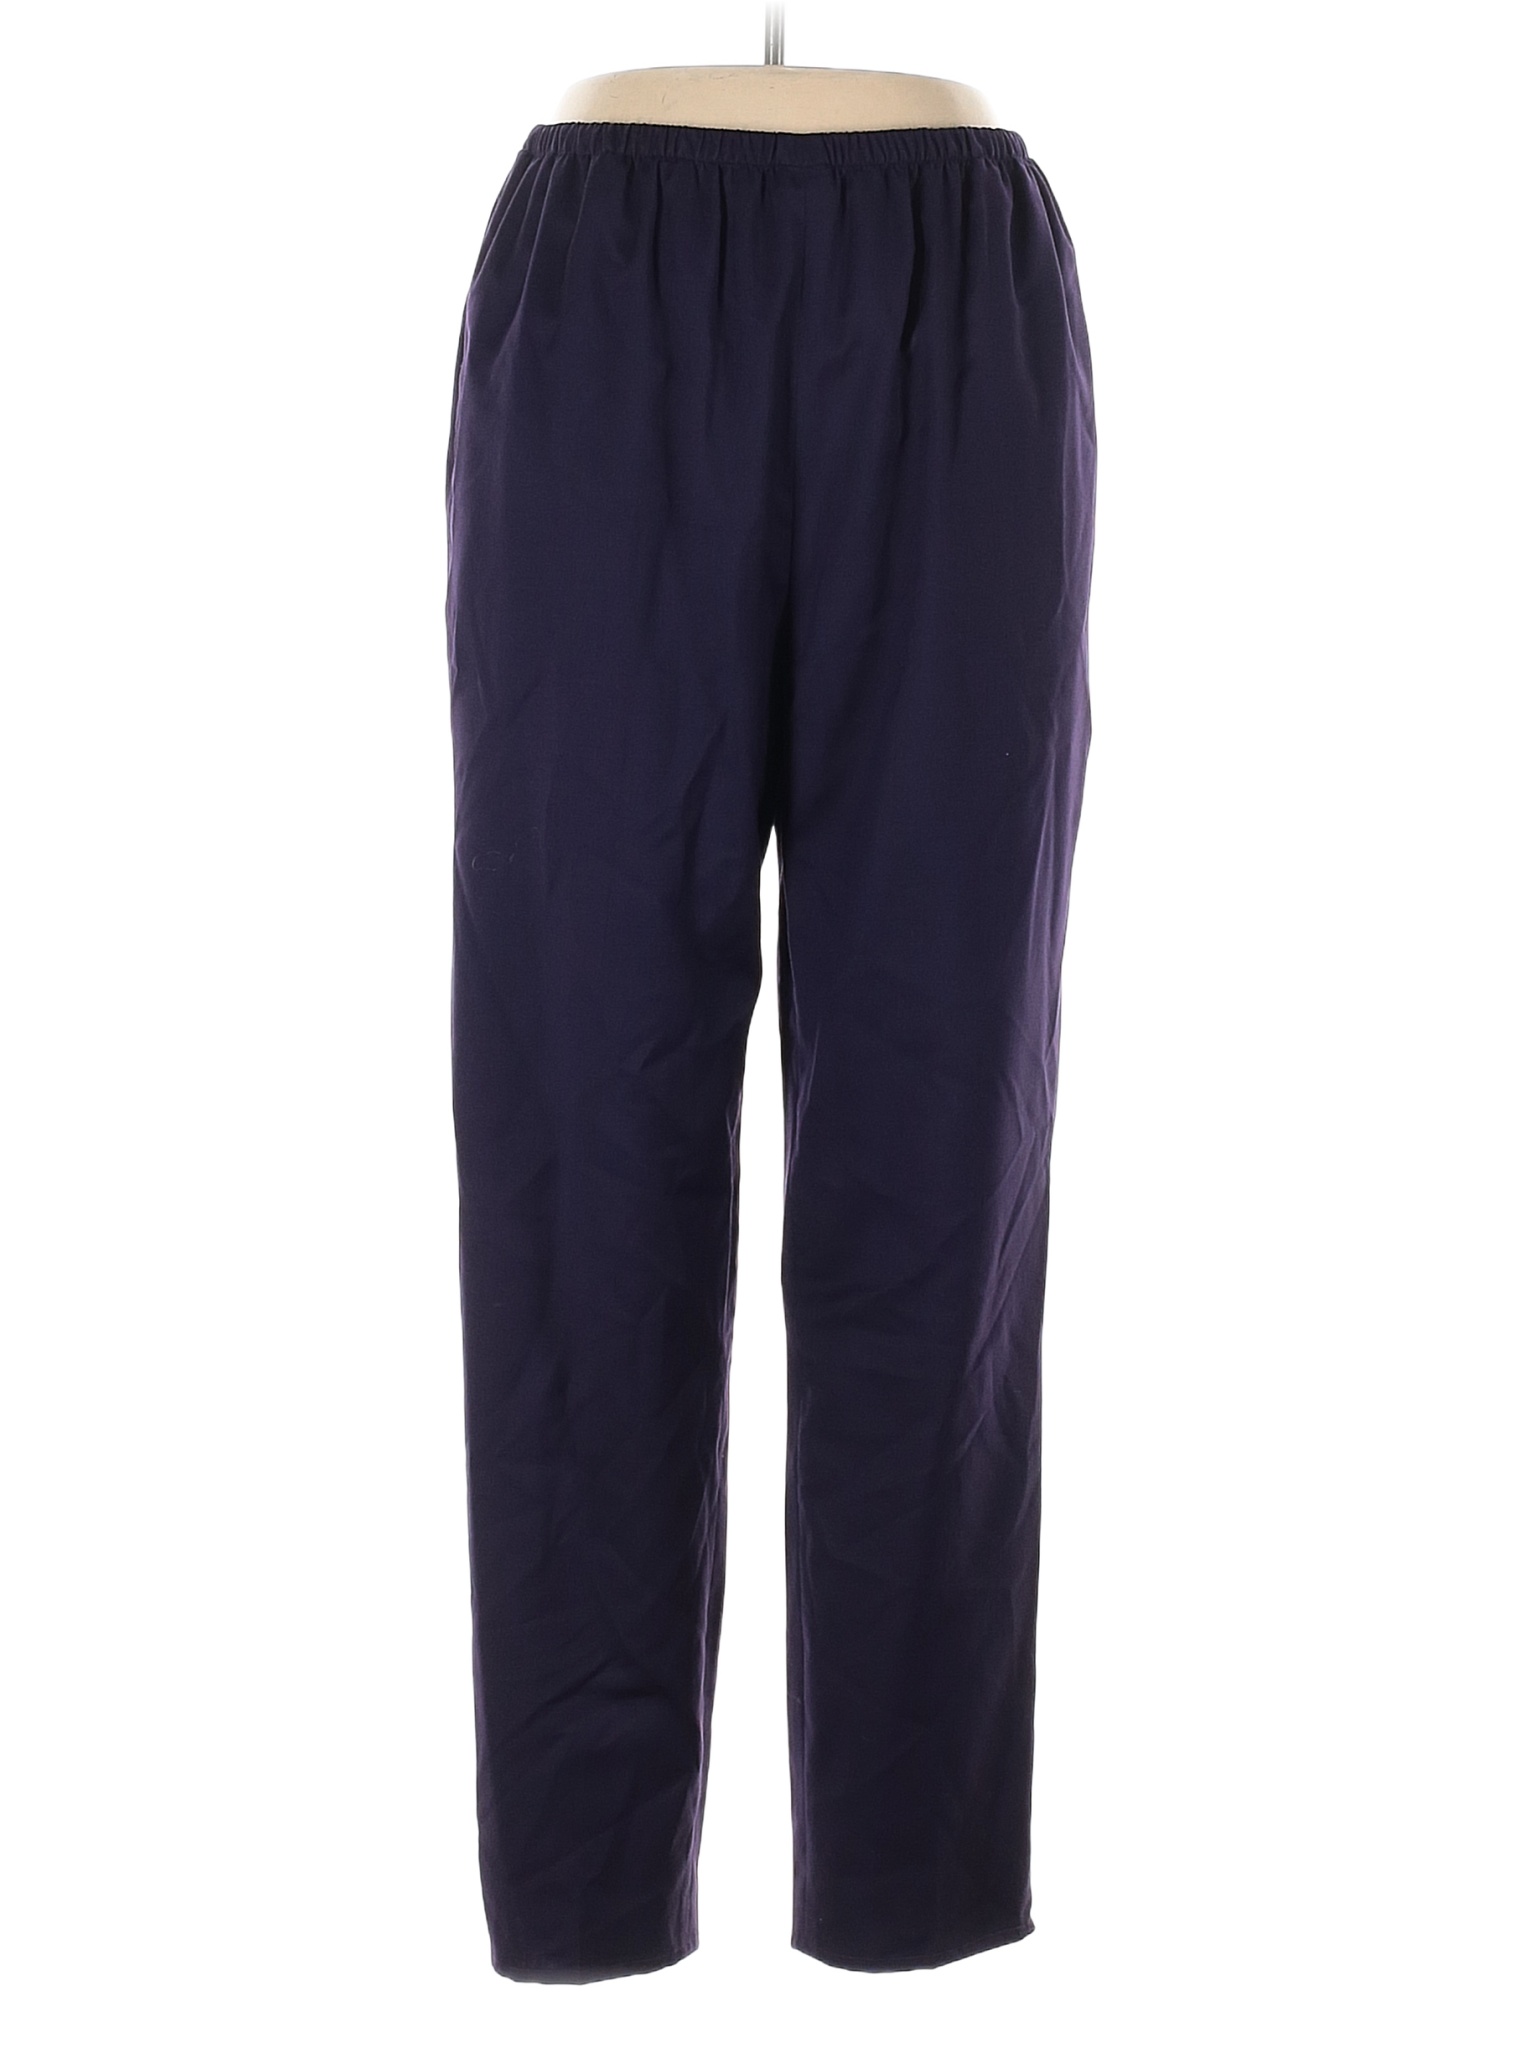 Shamask 100% Wool Solid Navy Purple Wool Pants Size Lg (2) - 87% off ...